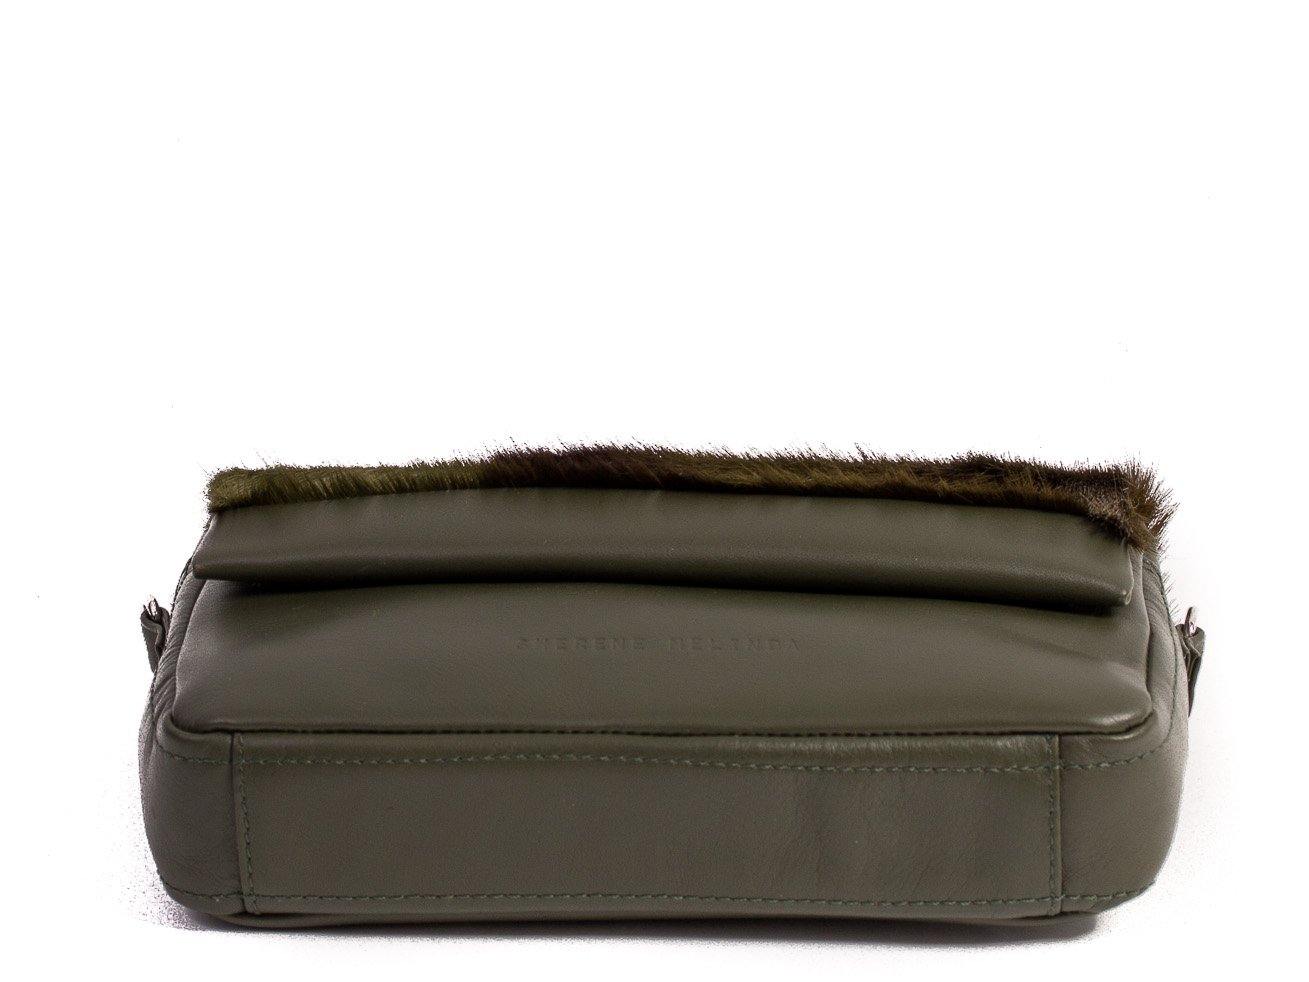 sherene melinda springbok hair-on-hide green leather shoulder bag Stripe bottom